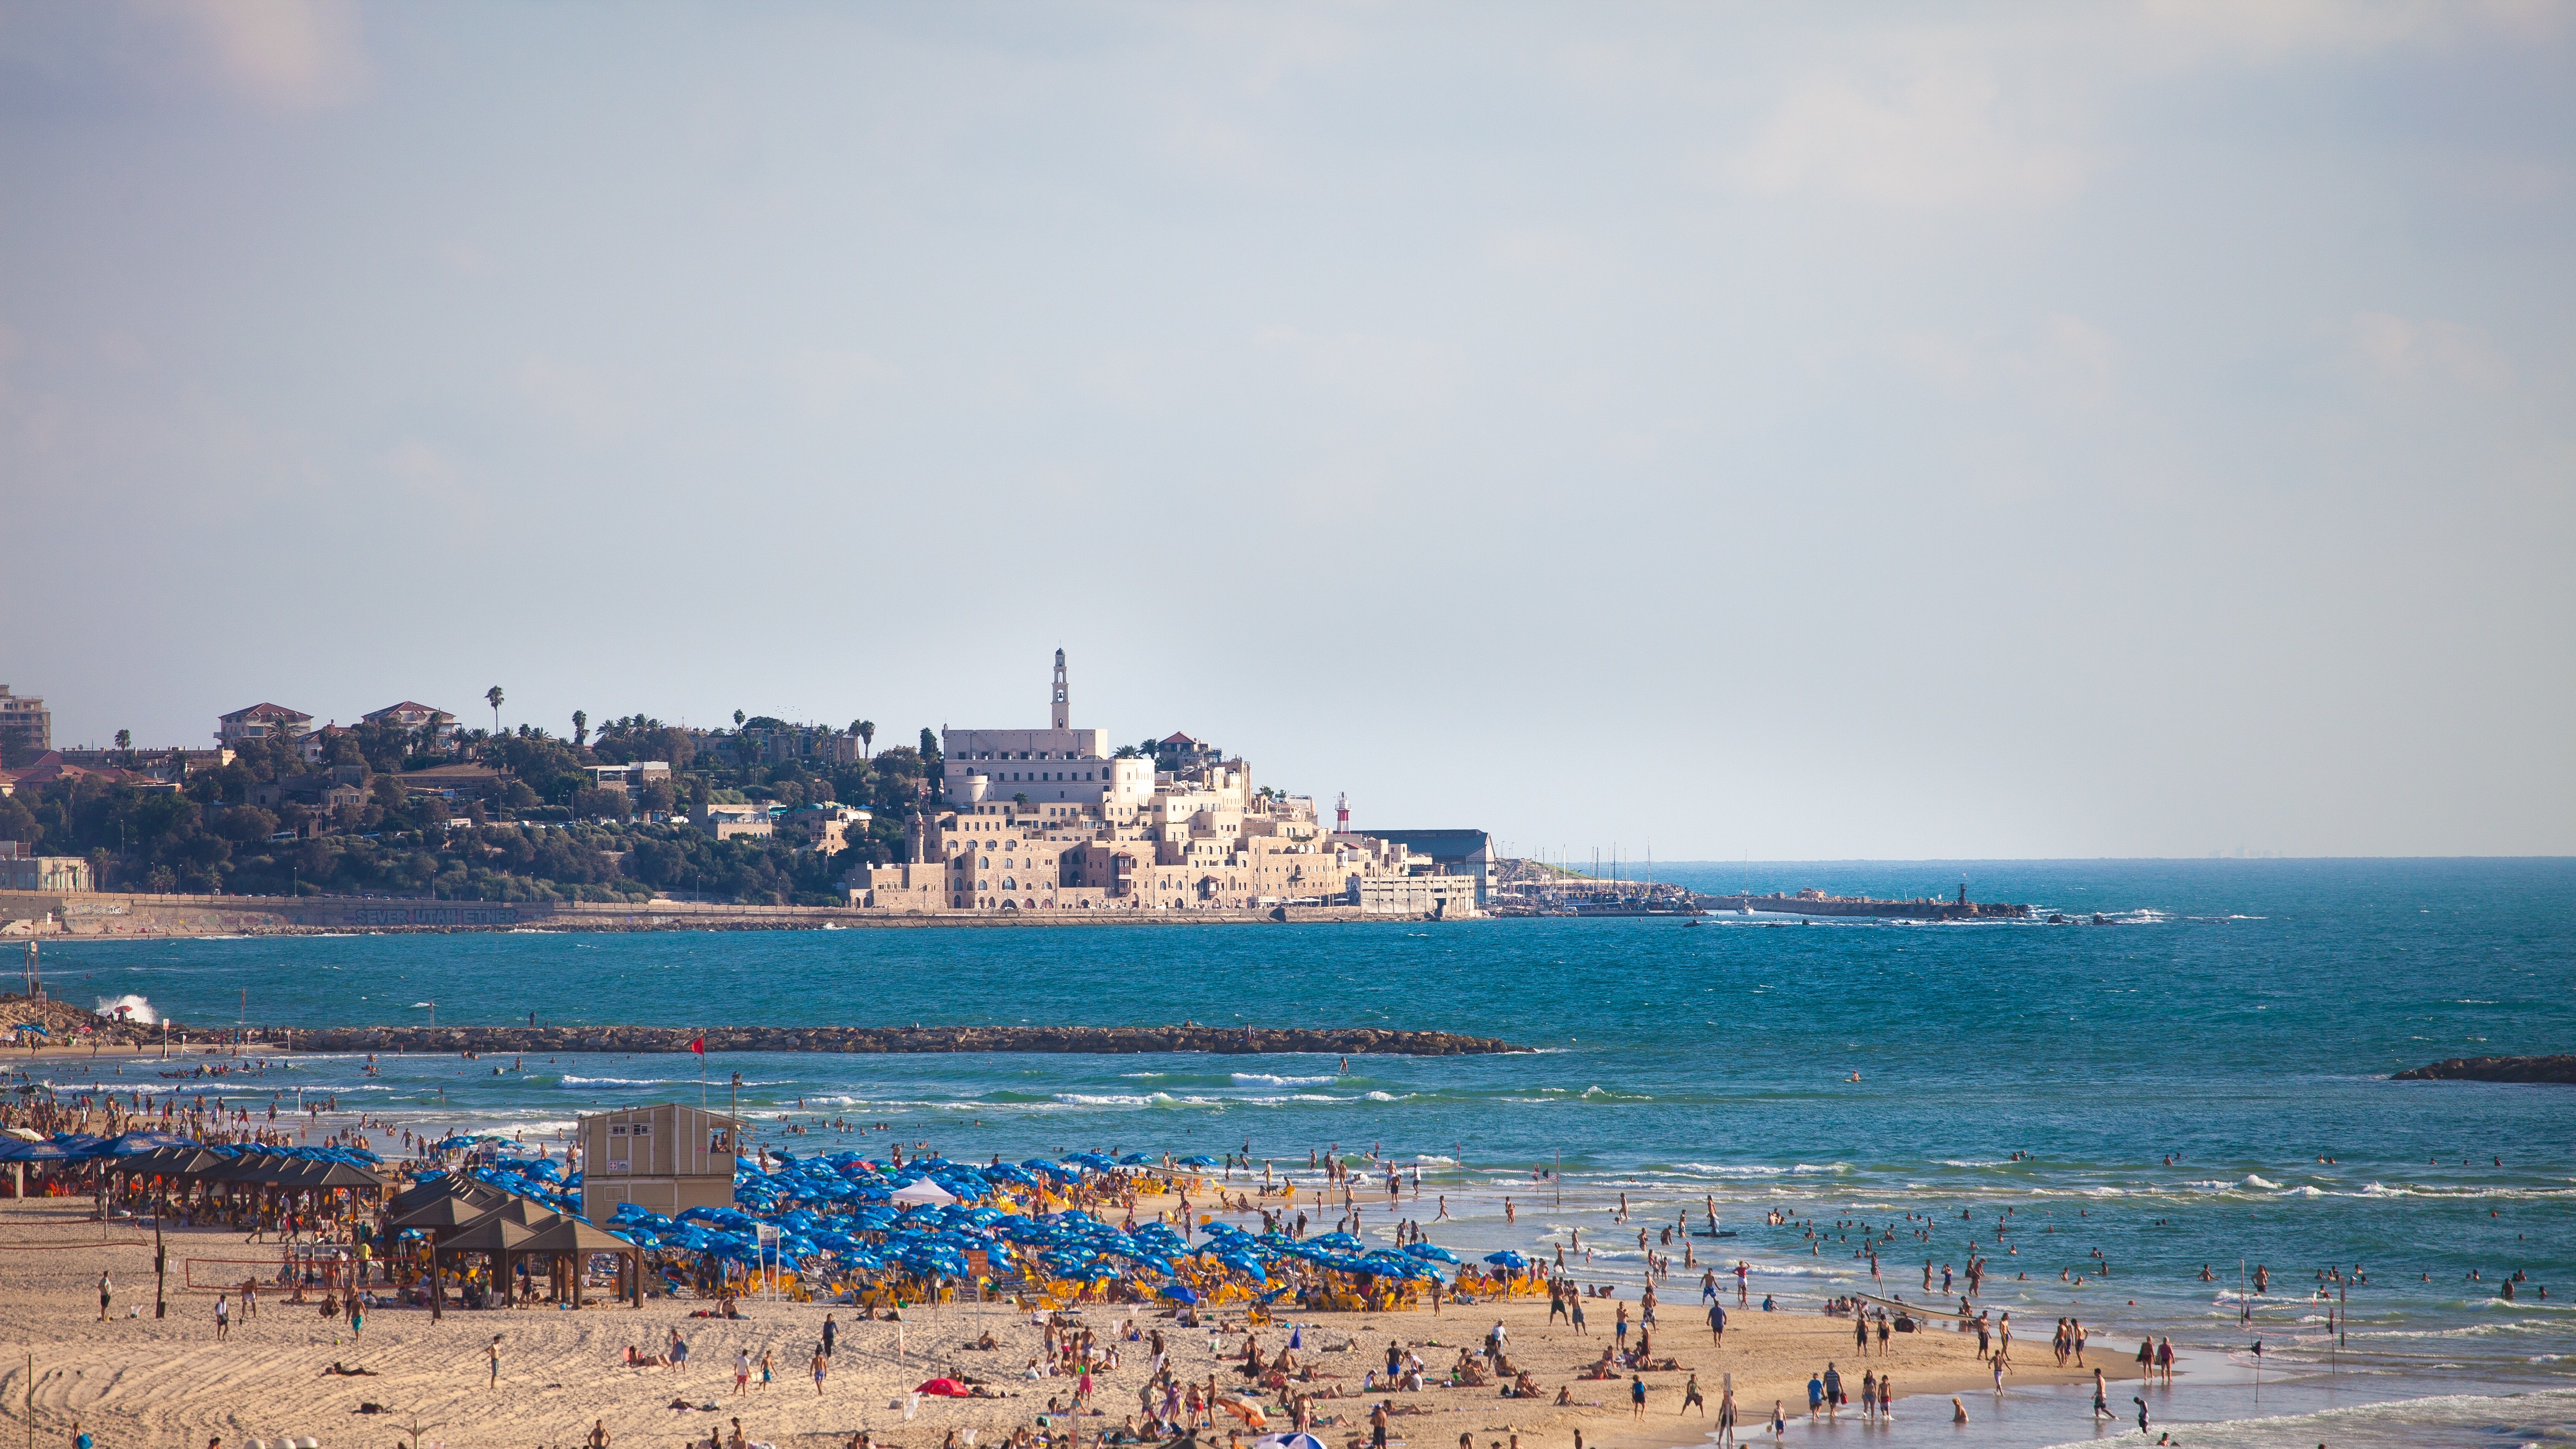 tel_aviv_jaffa_from_tel_aviv_beach_cr_dana_friedlander-israeli_ministry_of_tourism_cropped.jpg